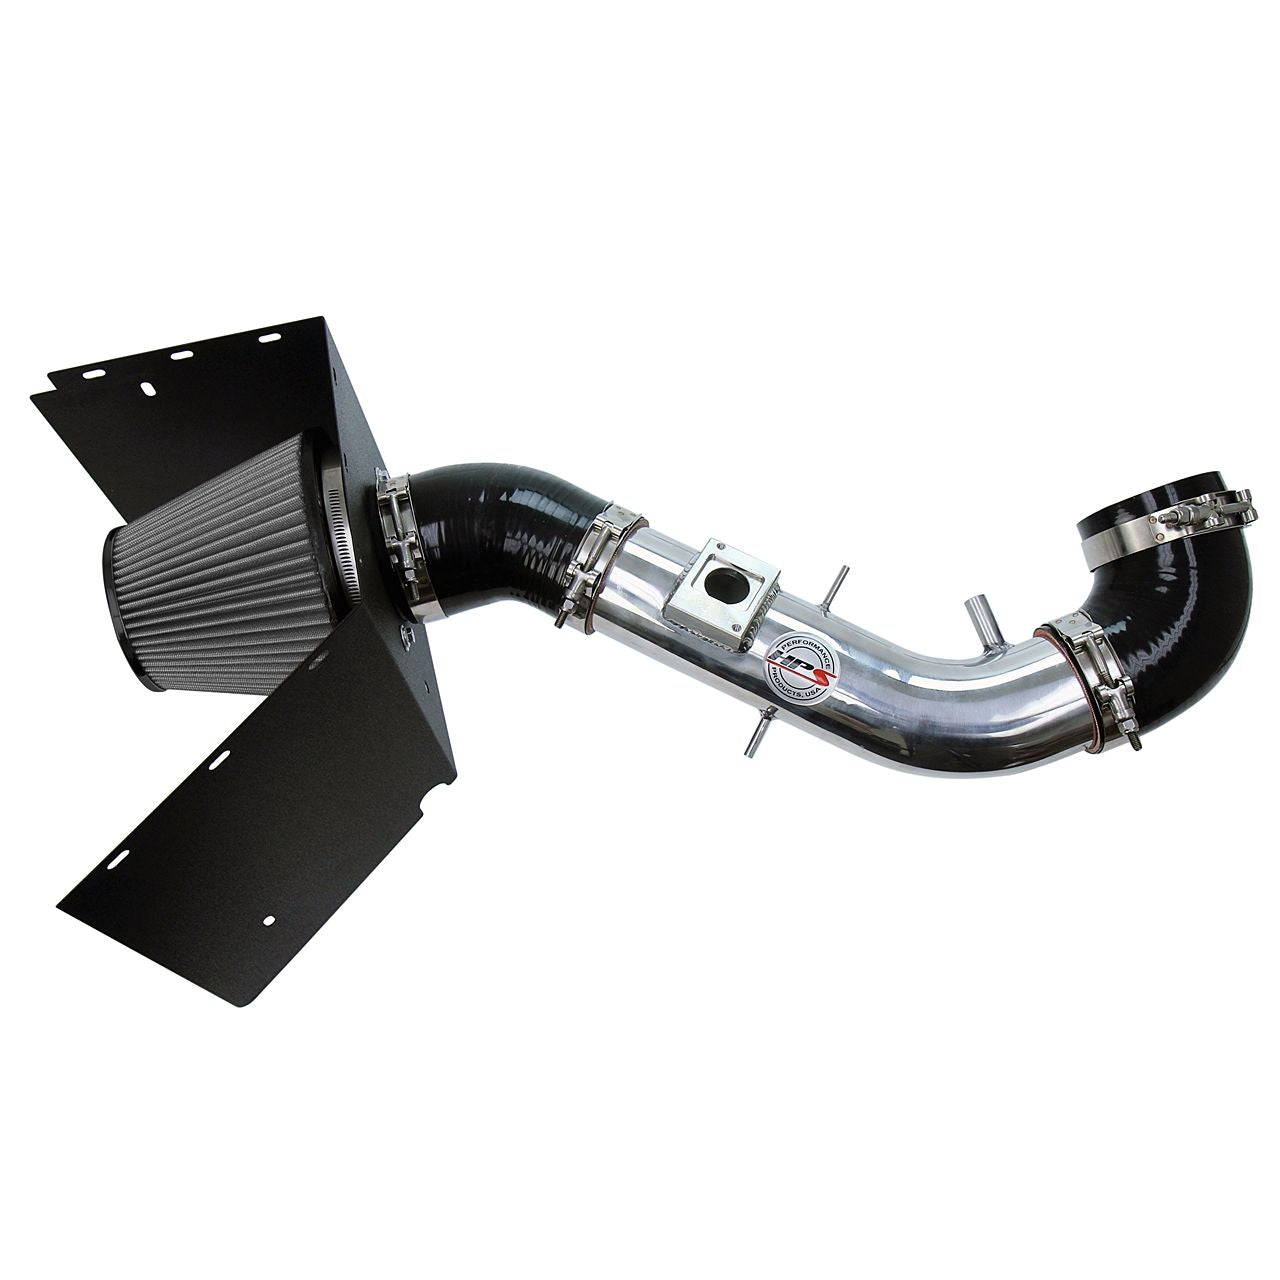 HPS Performance Dyno proven +6.5 horsepower +6.1 torque Heat Shield High Flow Air Filter